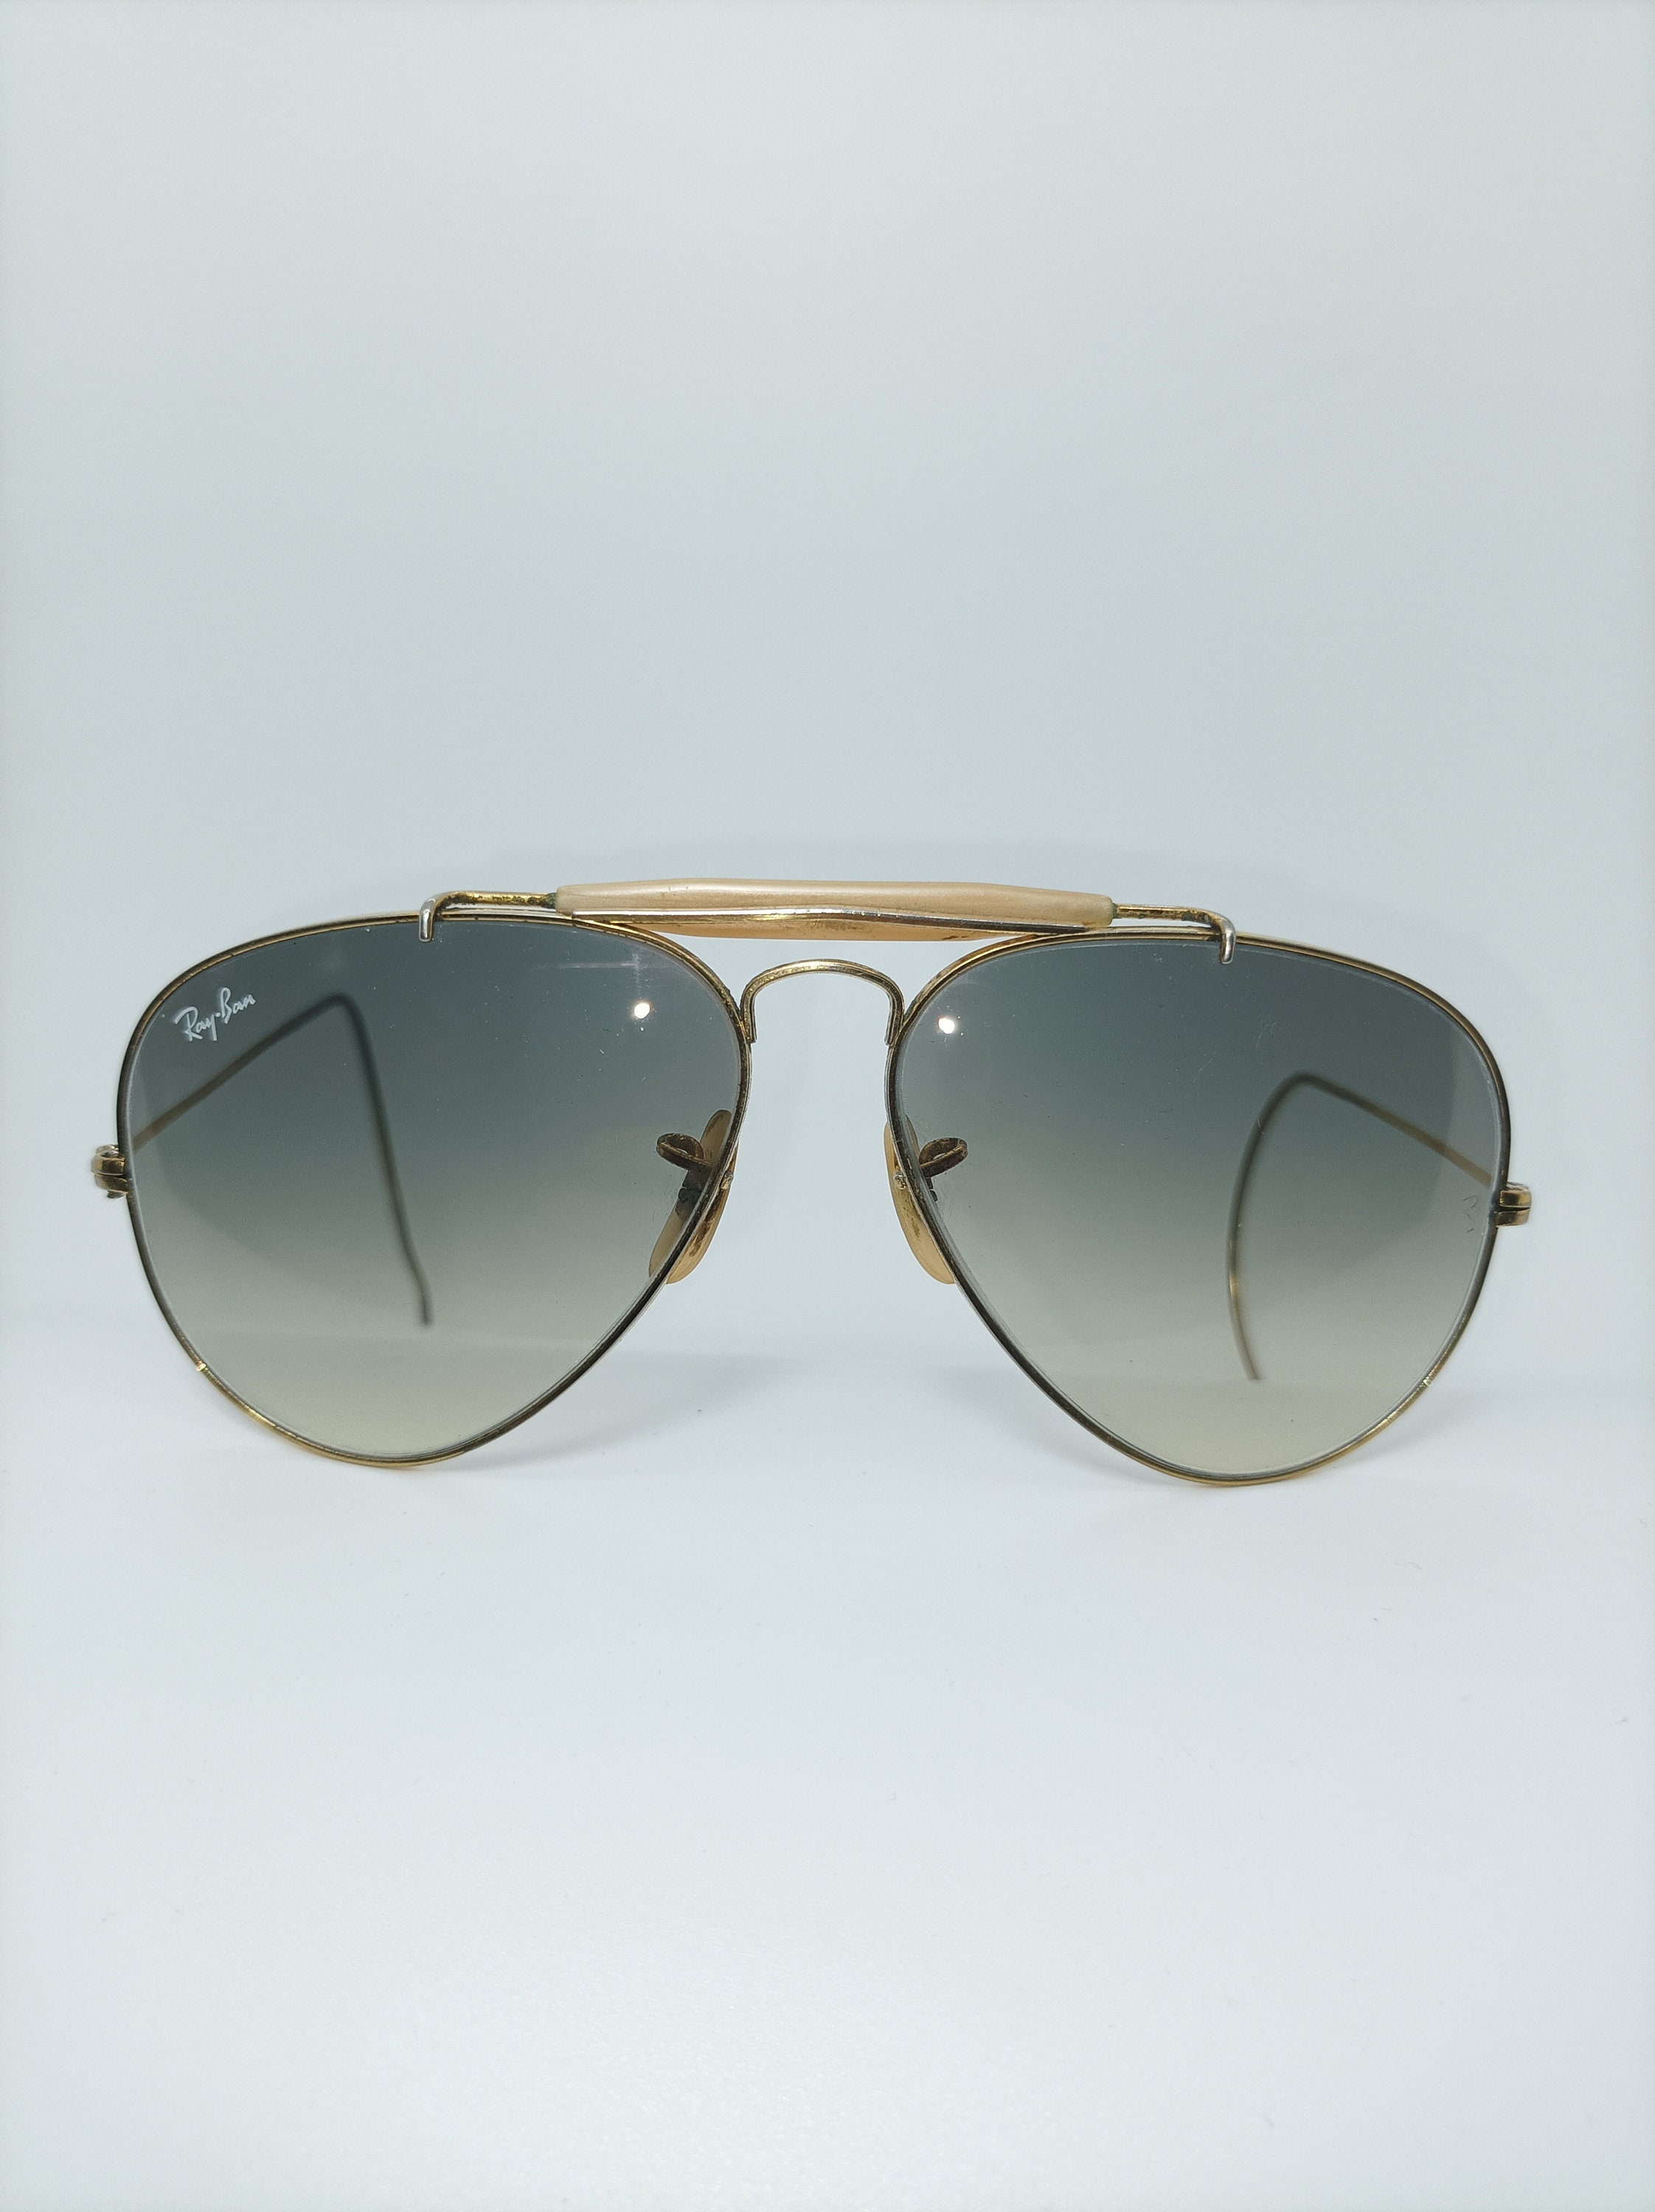 Breaksun Square Aviator Sunglasses for Men Women Fashion Vintage Diamond  Cutting Lens Classic Military Pilot Gradient Shades